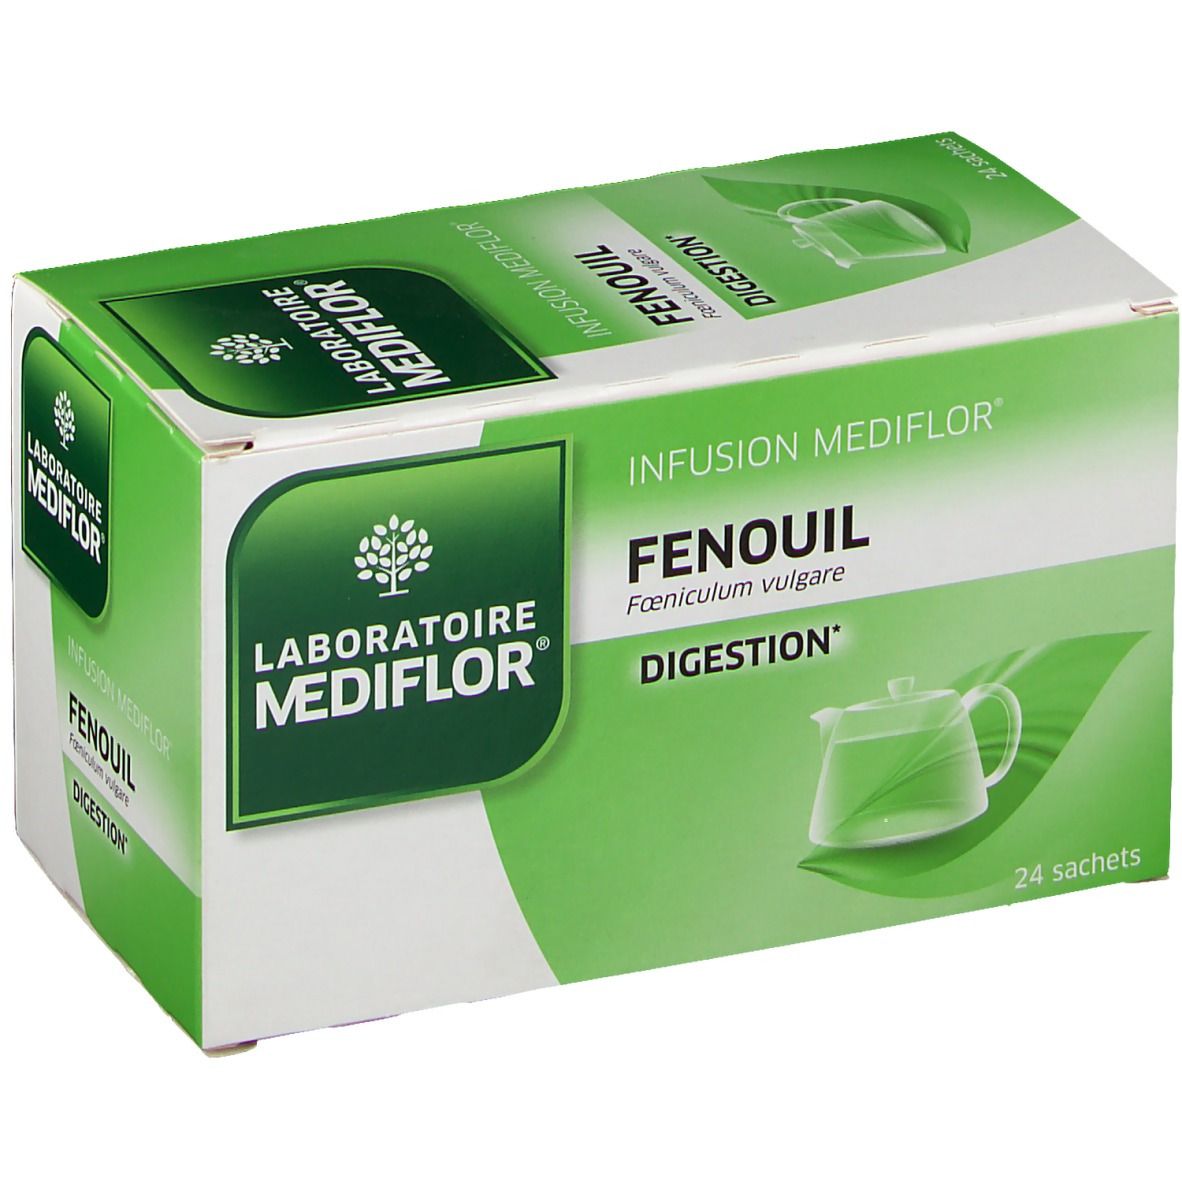 Laboratoire Mediflor® fenouil